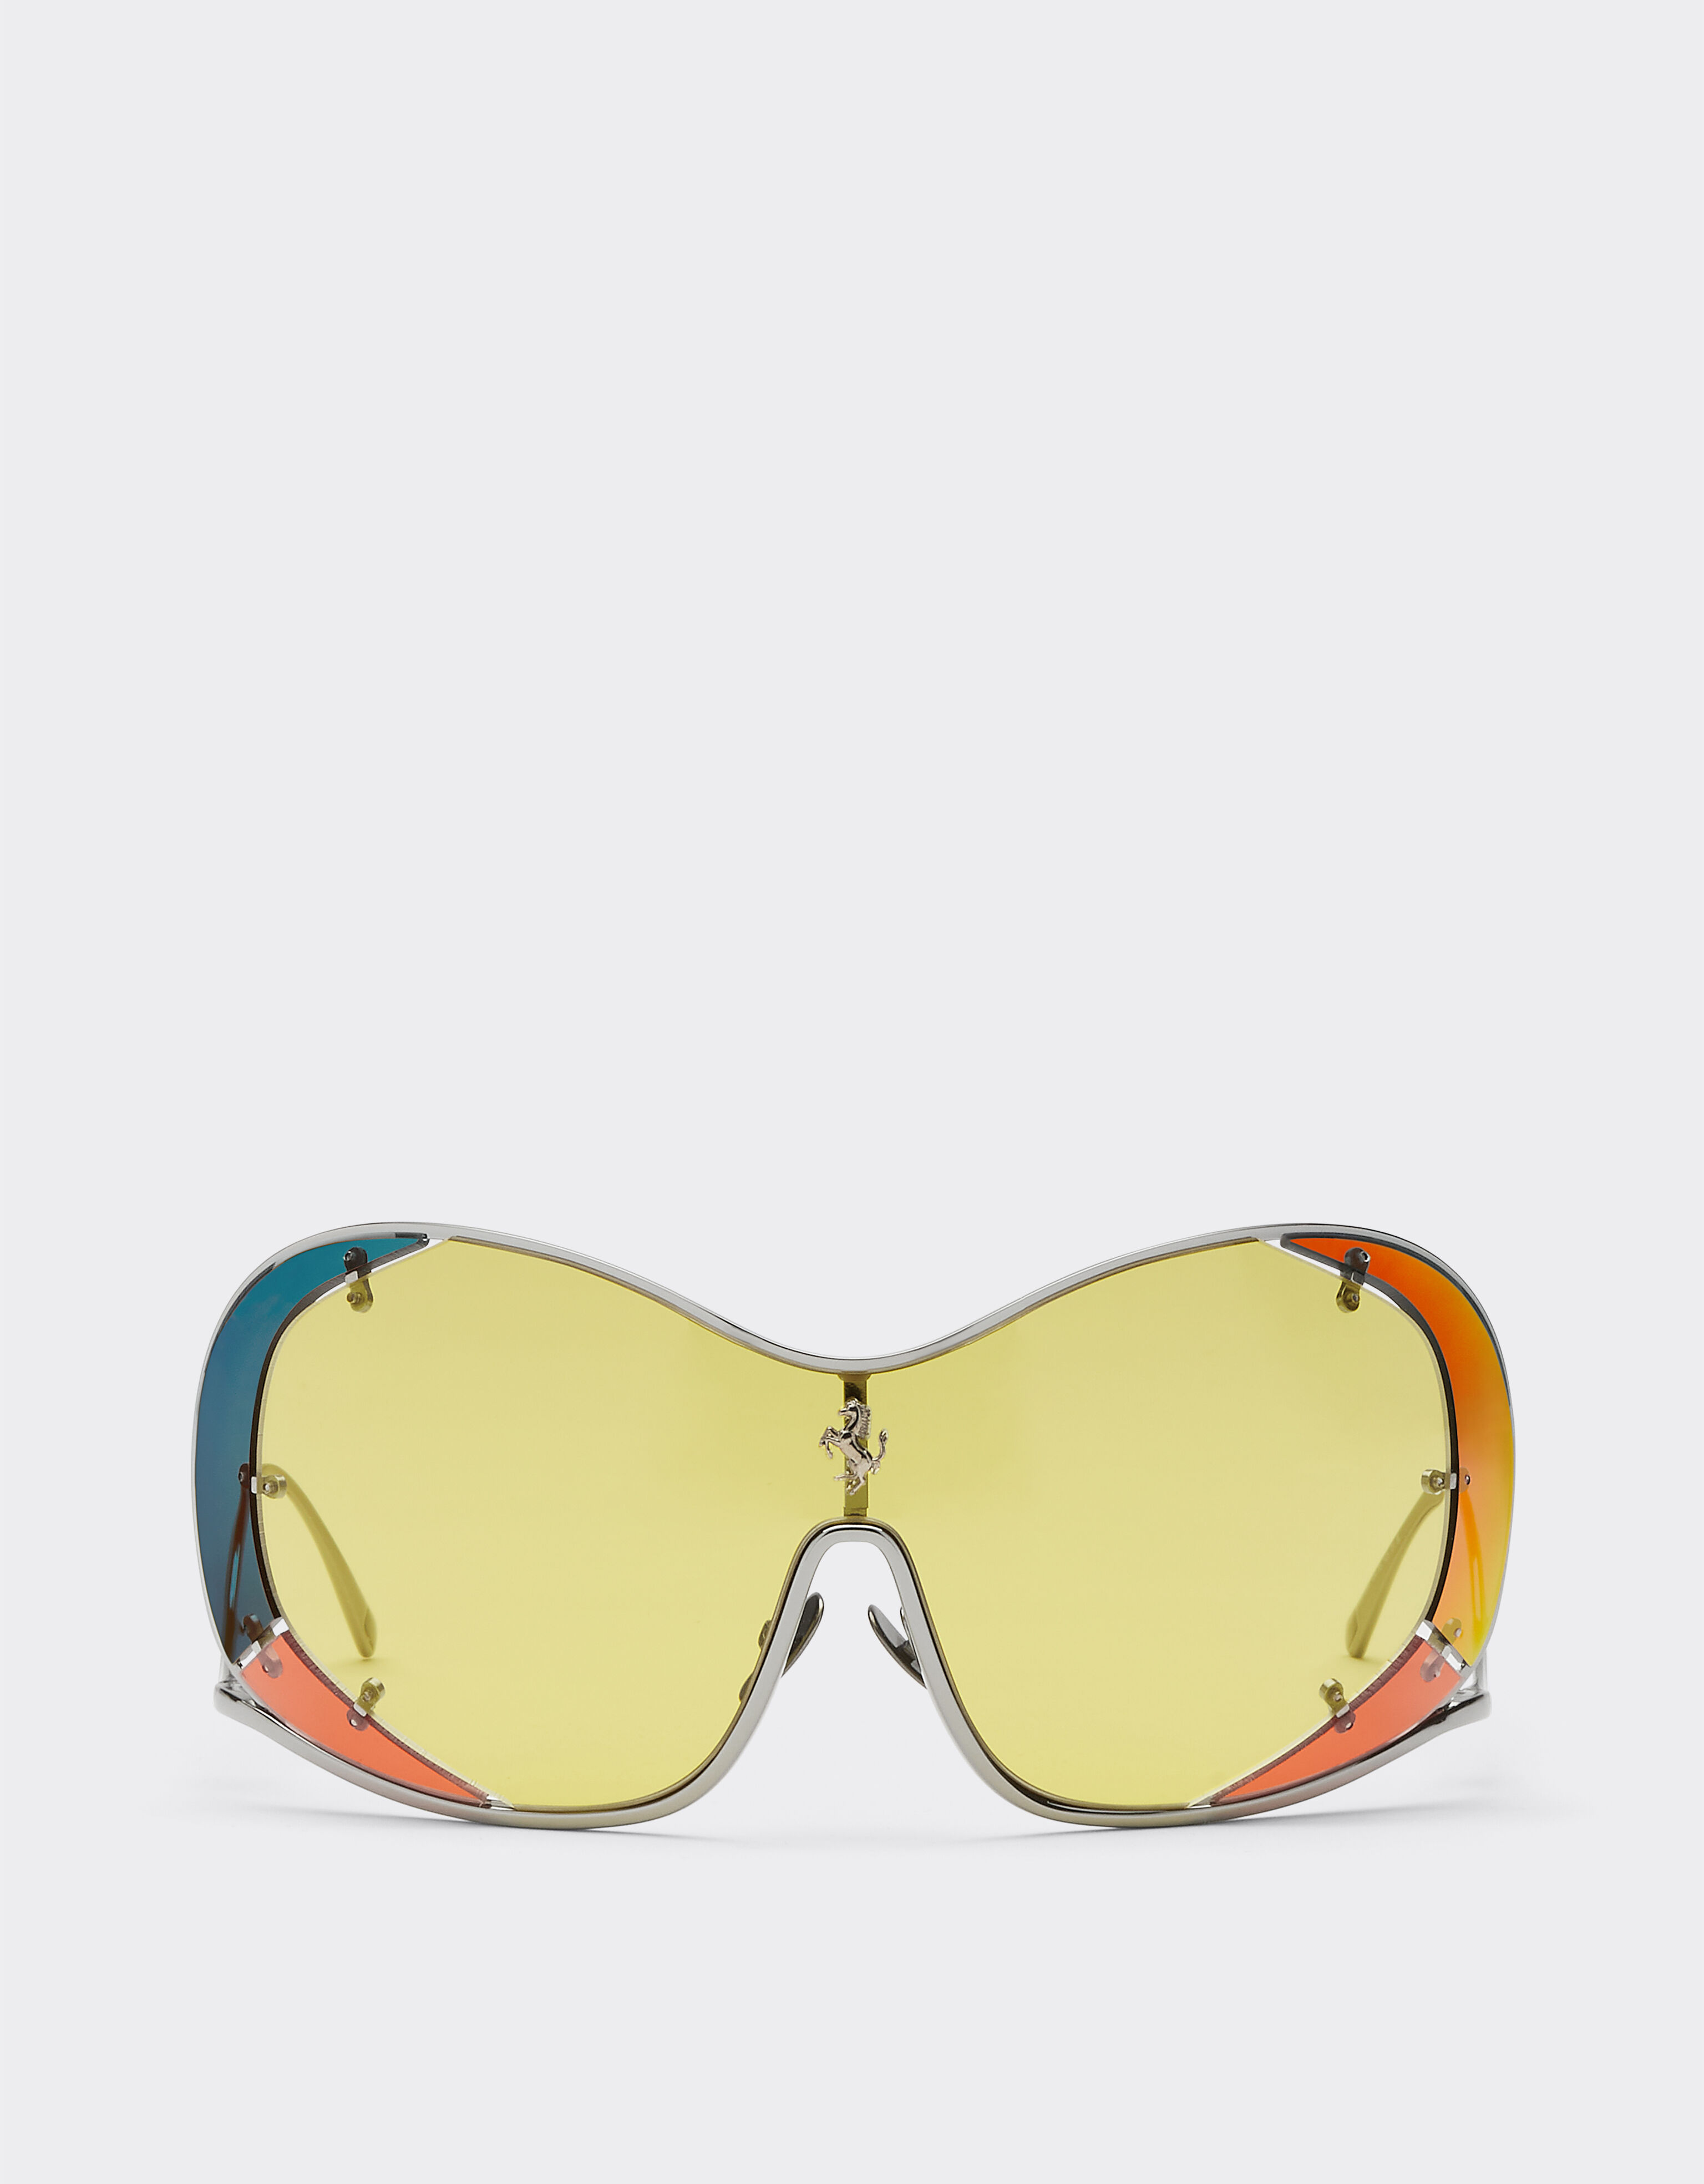 Ferrari Ferrari sunglasses with yellow lenses 黑色 F1201f